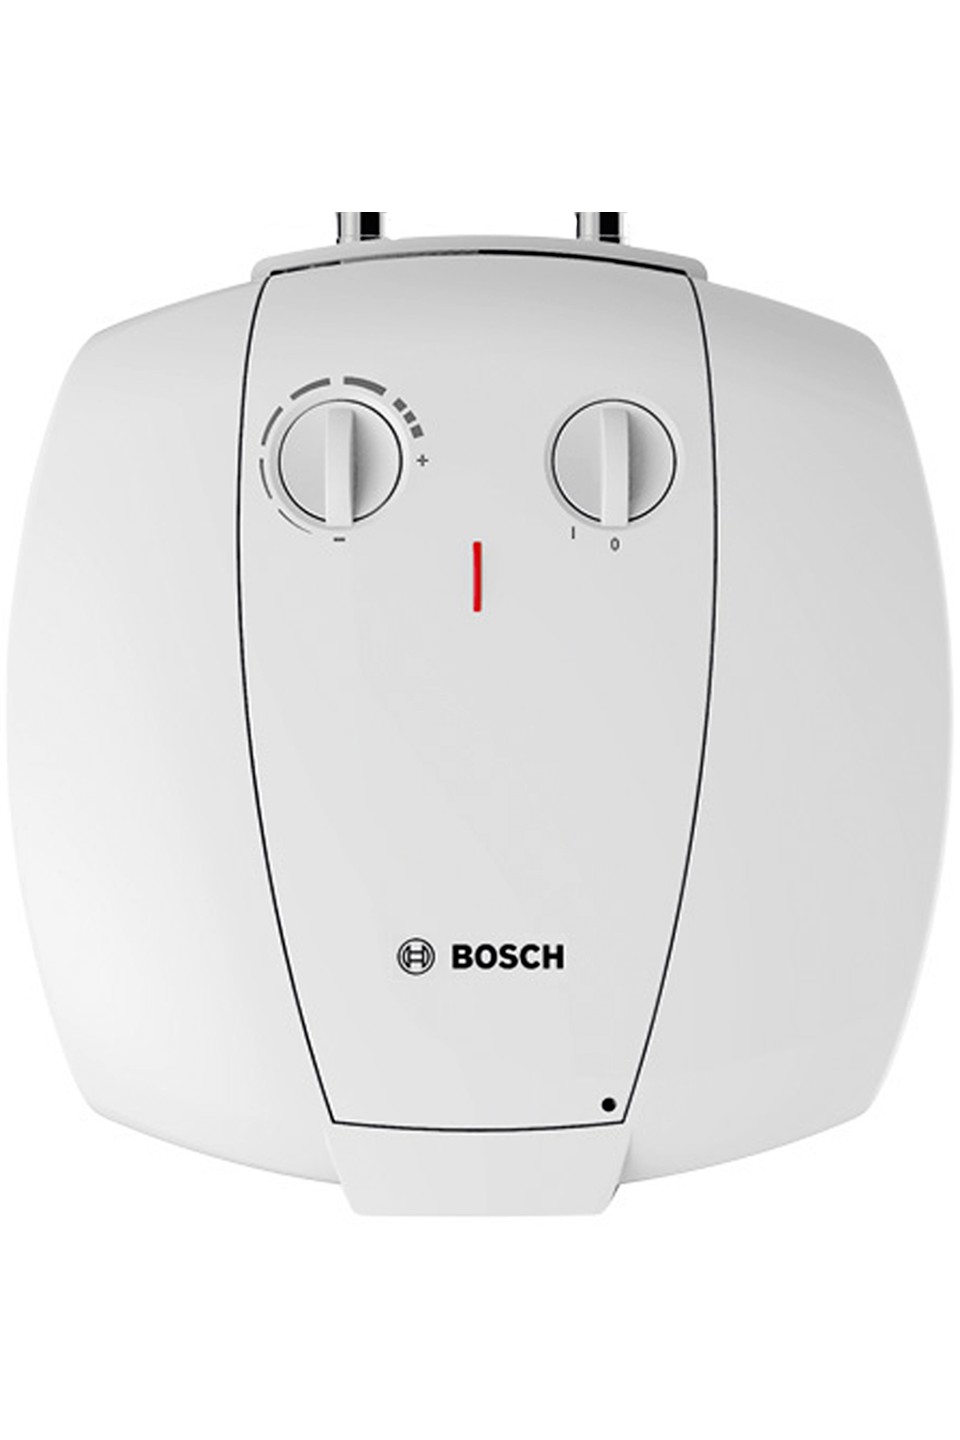 Настенный бойлер Bosch TR 2000 T 15 T (7736504744) в Киеве